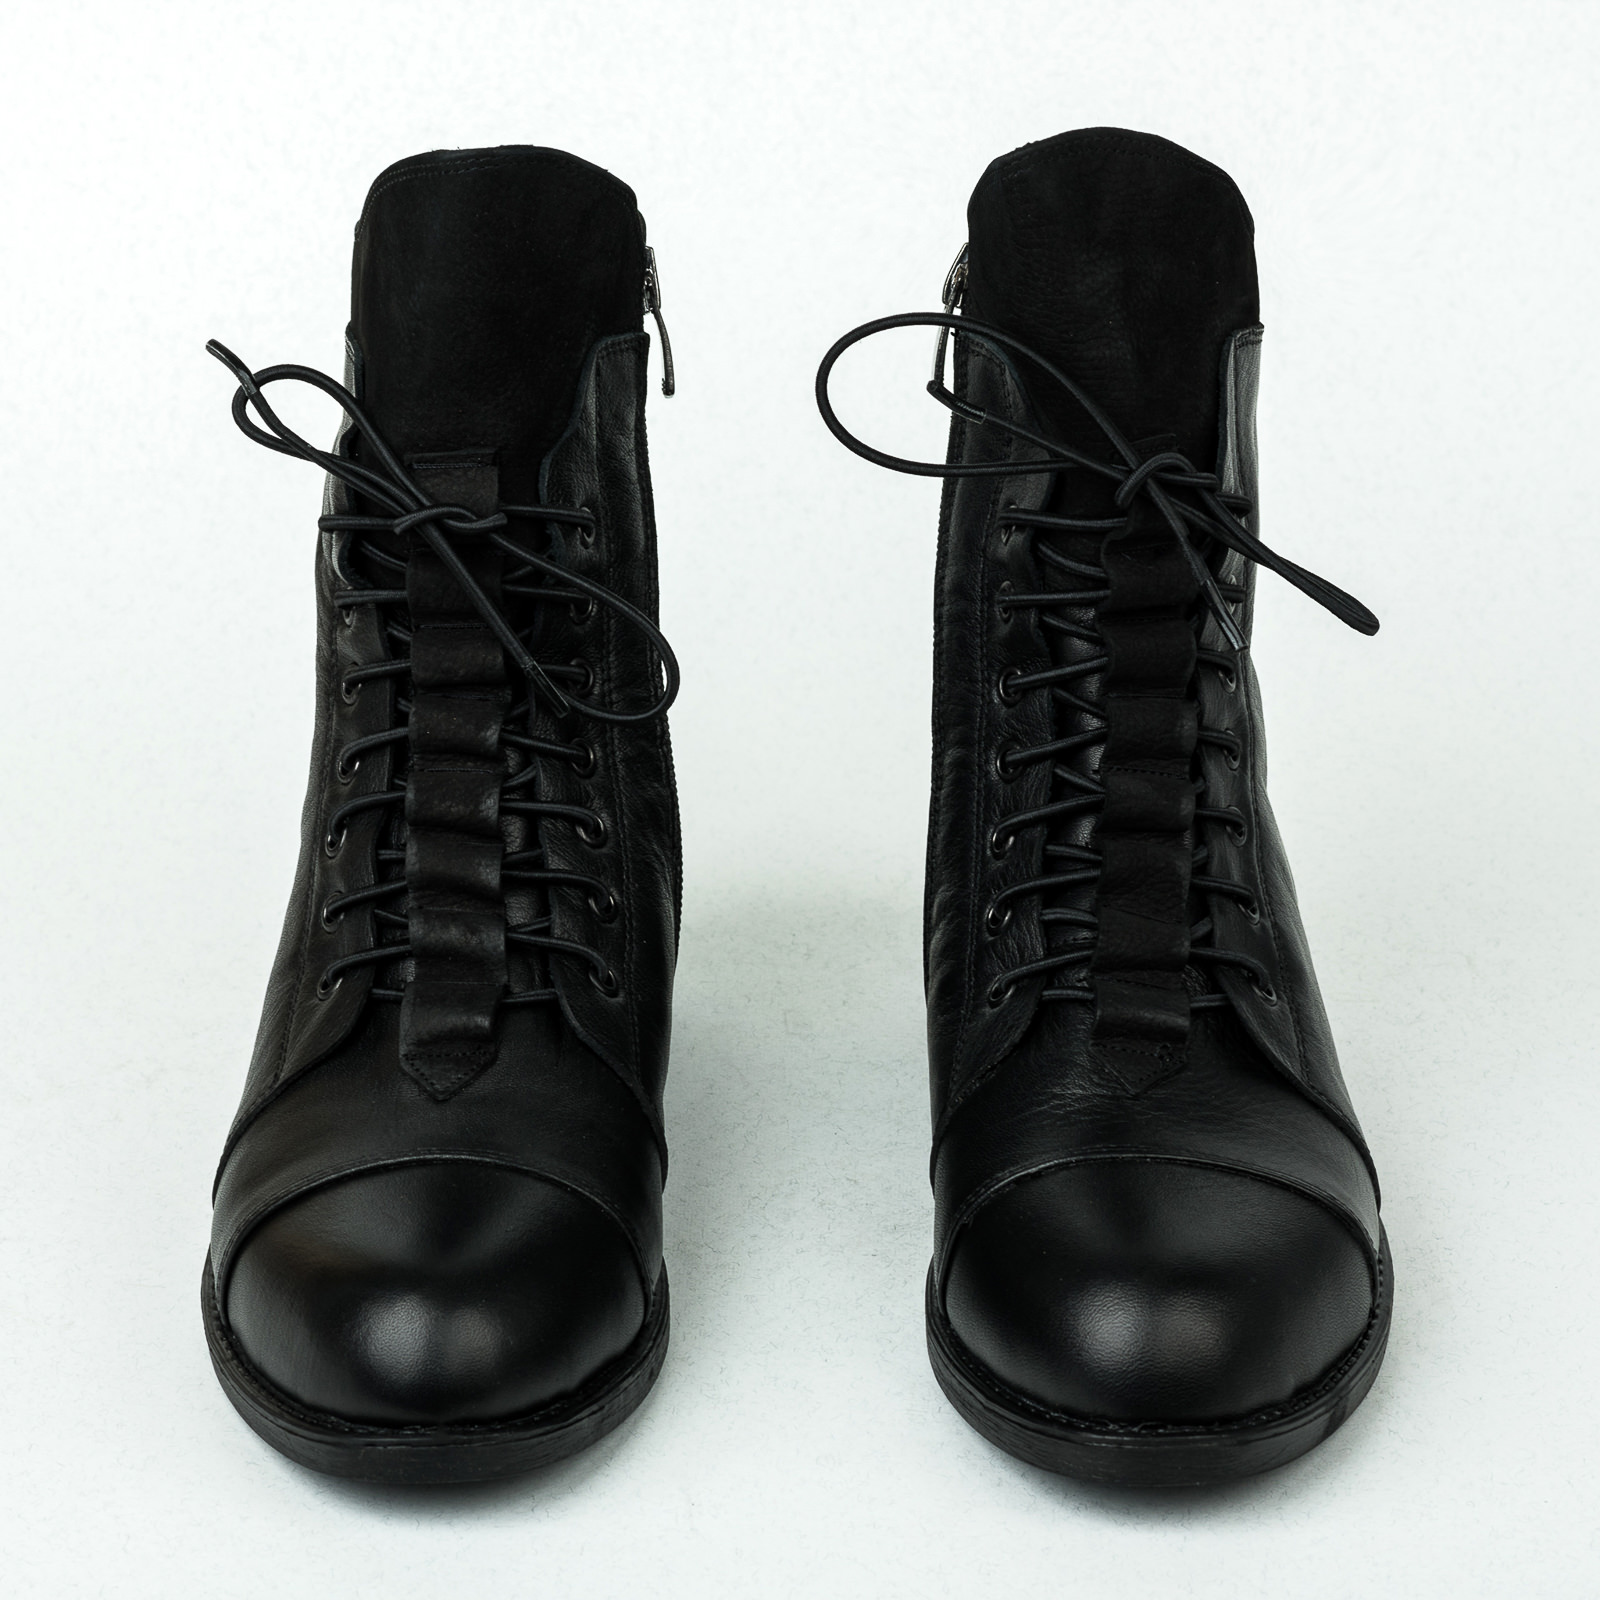 Leather booties B245 - BLACK